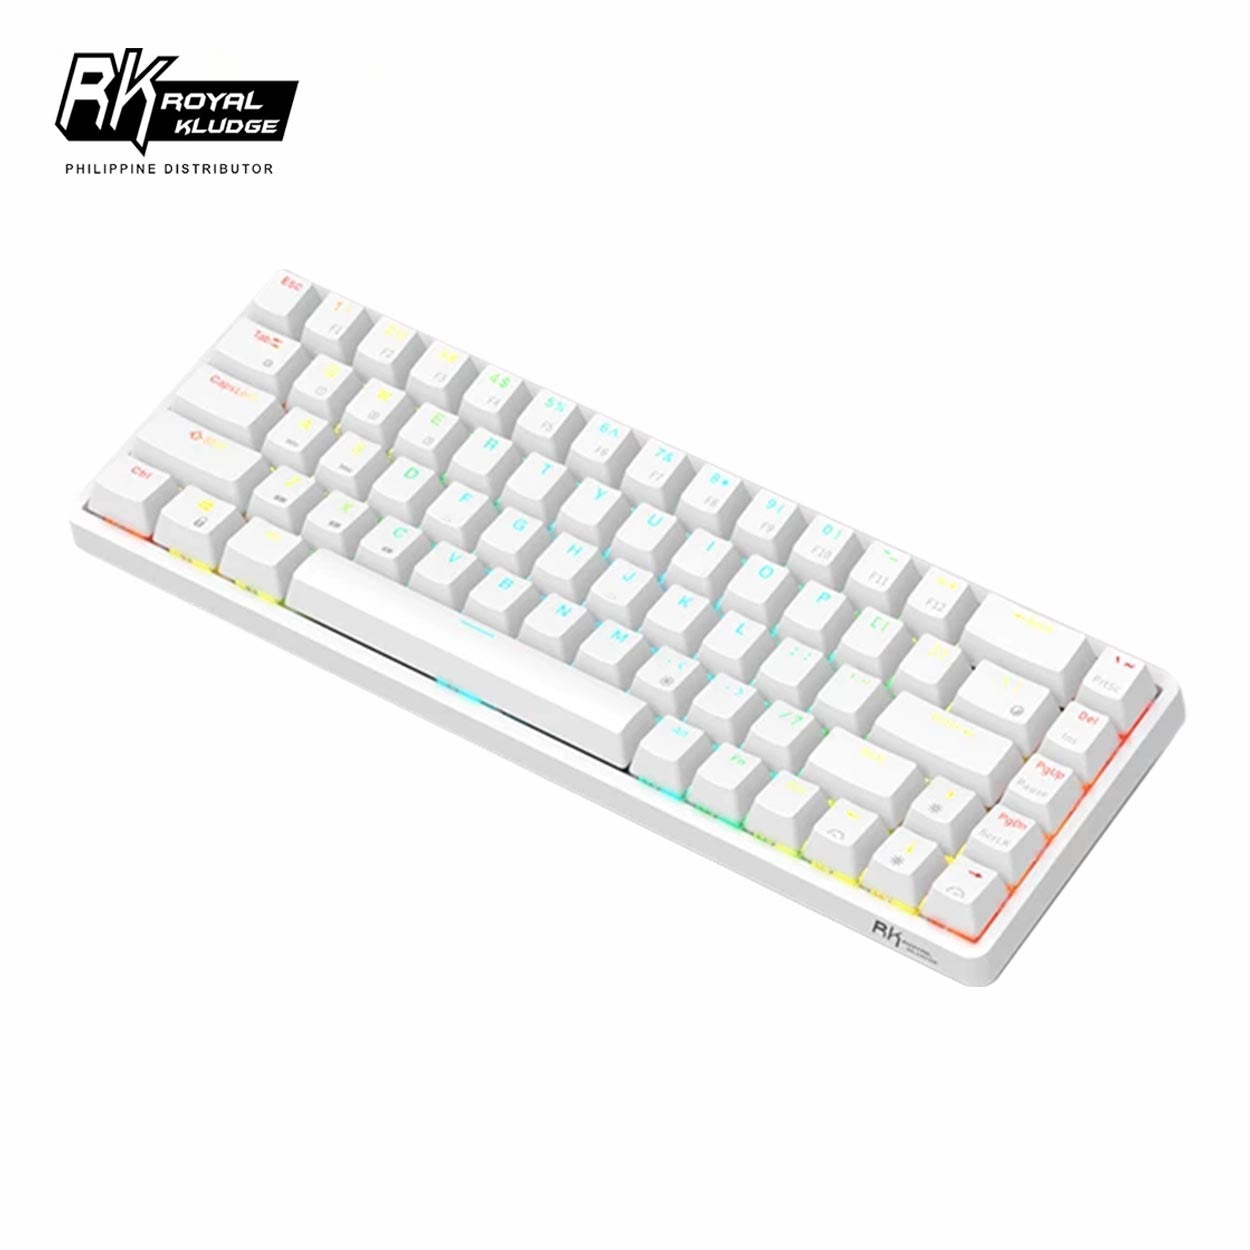 Royal Kludge RKG68 65% Wireless Mechanical Gaming Keyboard